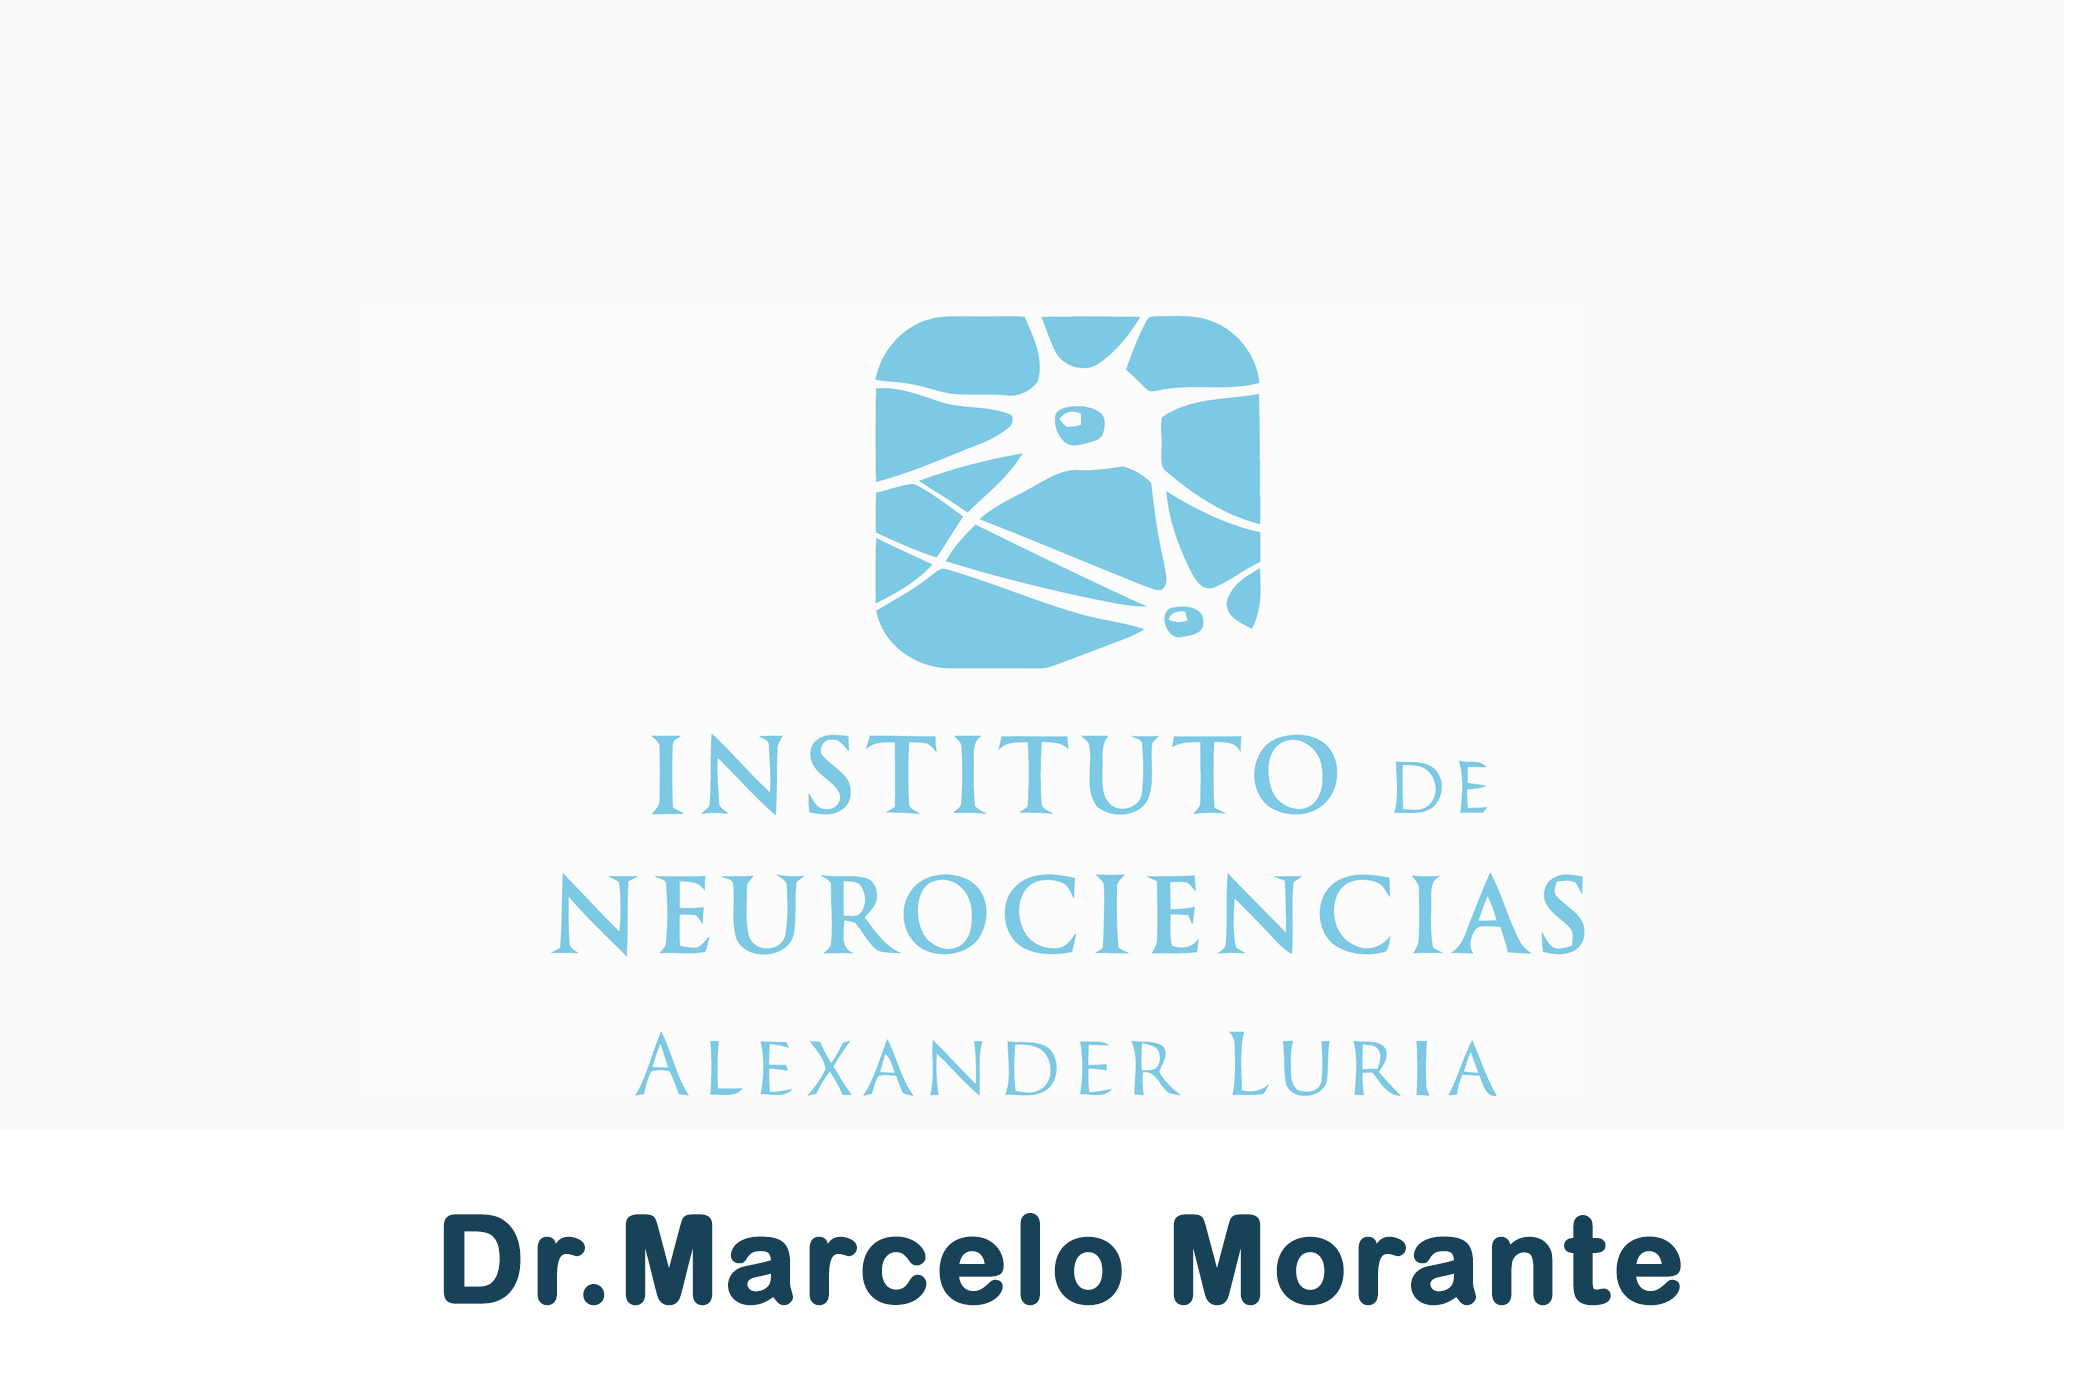 Dr. Marcelo Morante